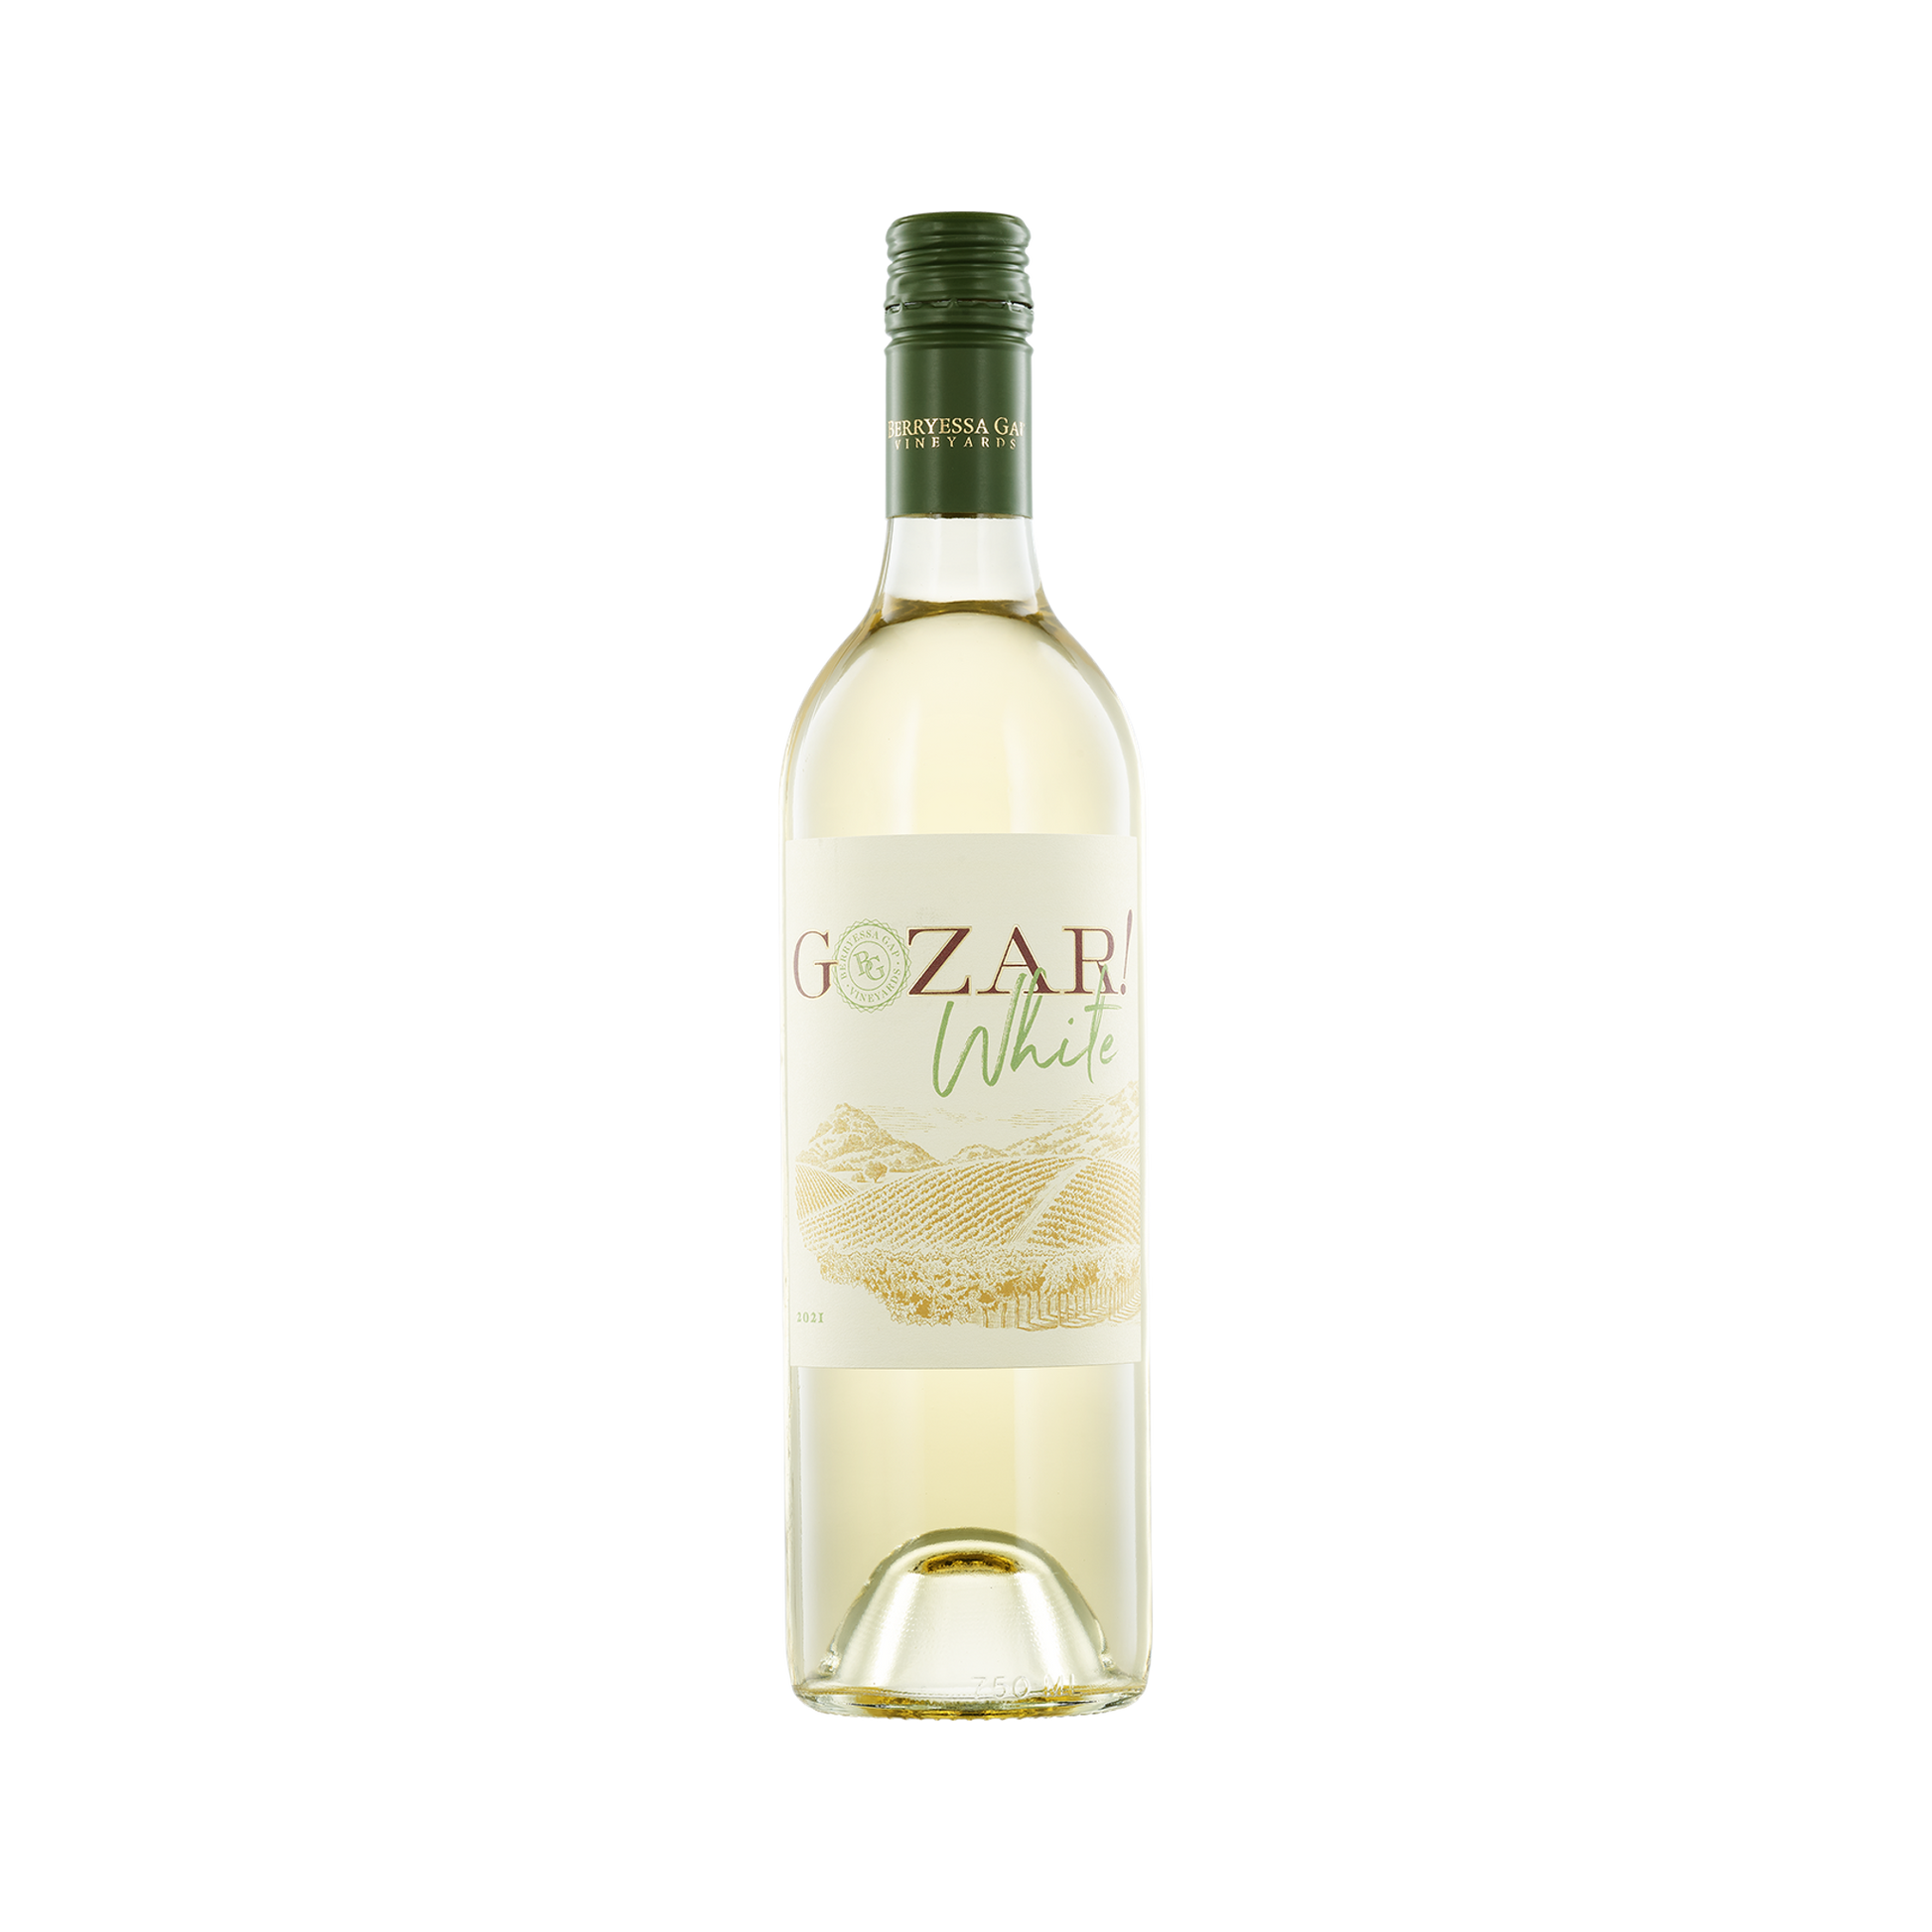 A bottle of Berryessa Gap Vineyards 2021 'Gozar' White Blend